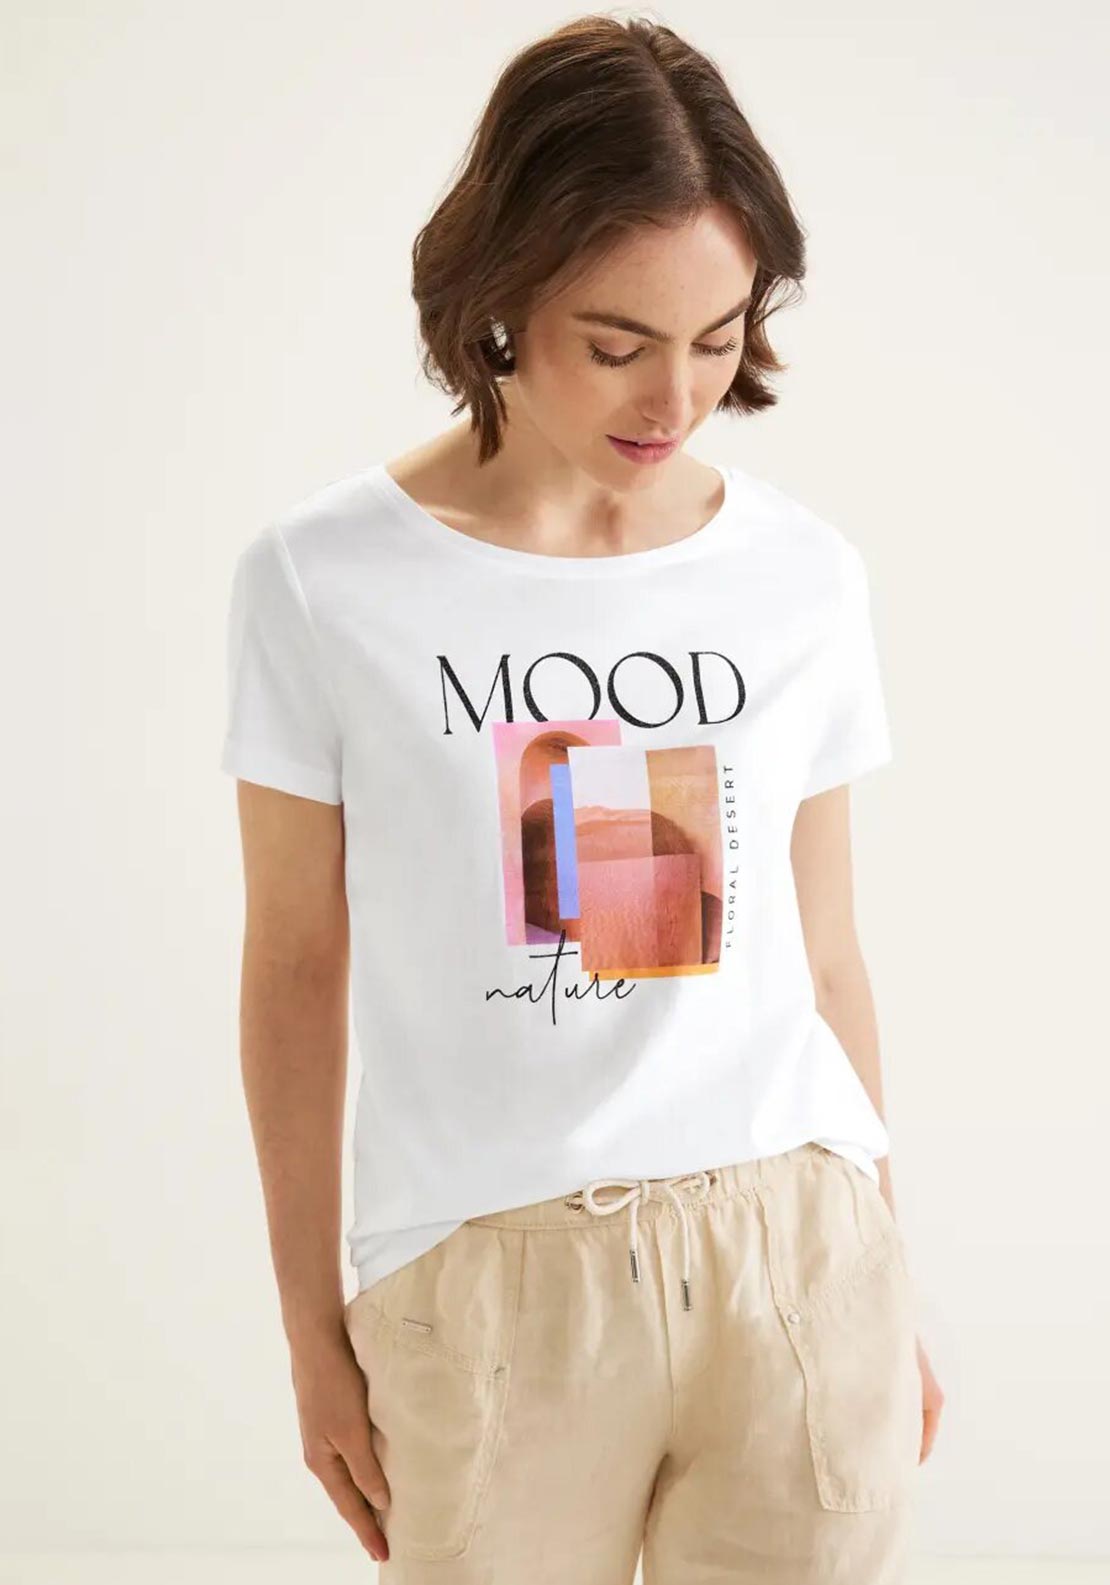 McElhinneys Graphic - Mood T-Shirt, One Street White